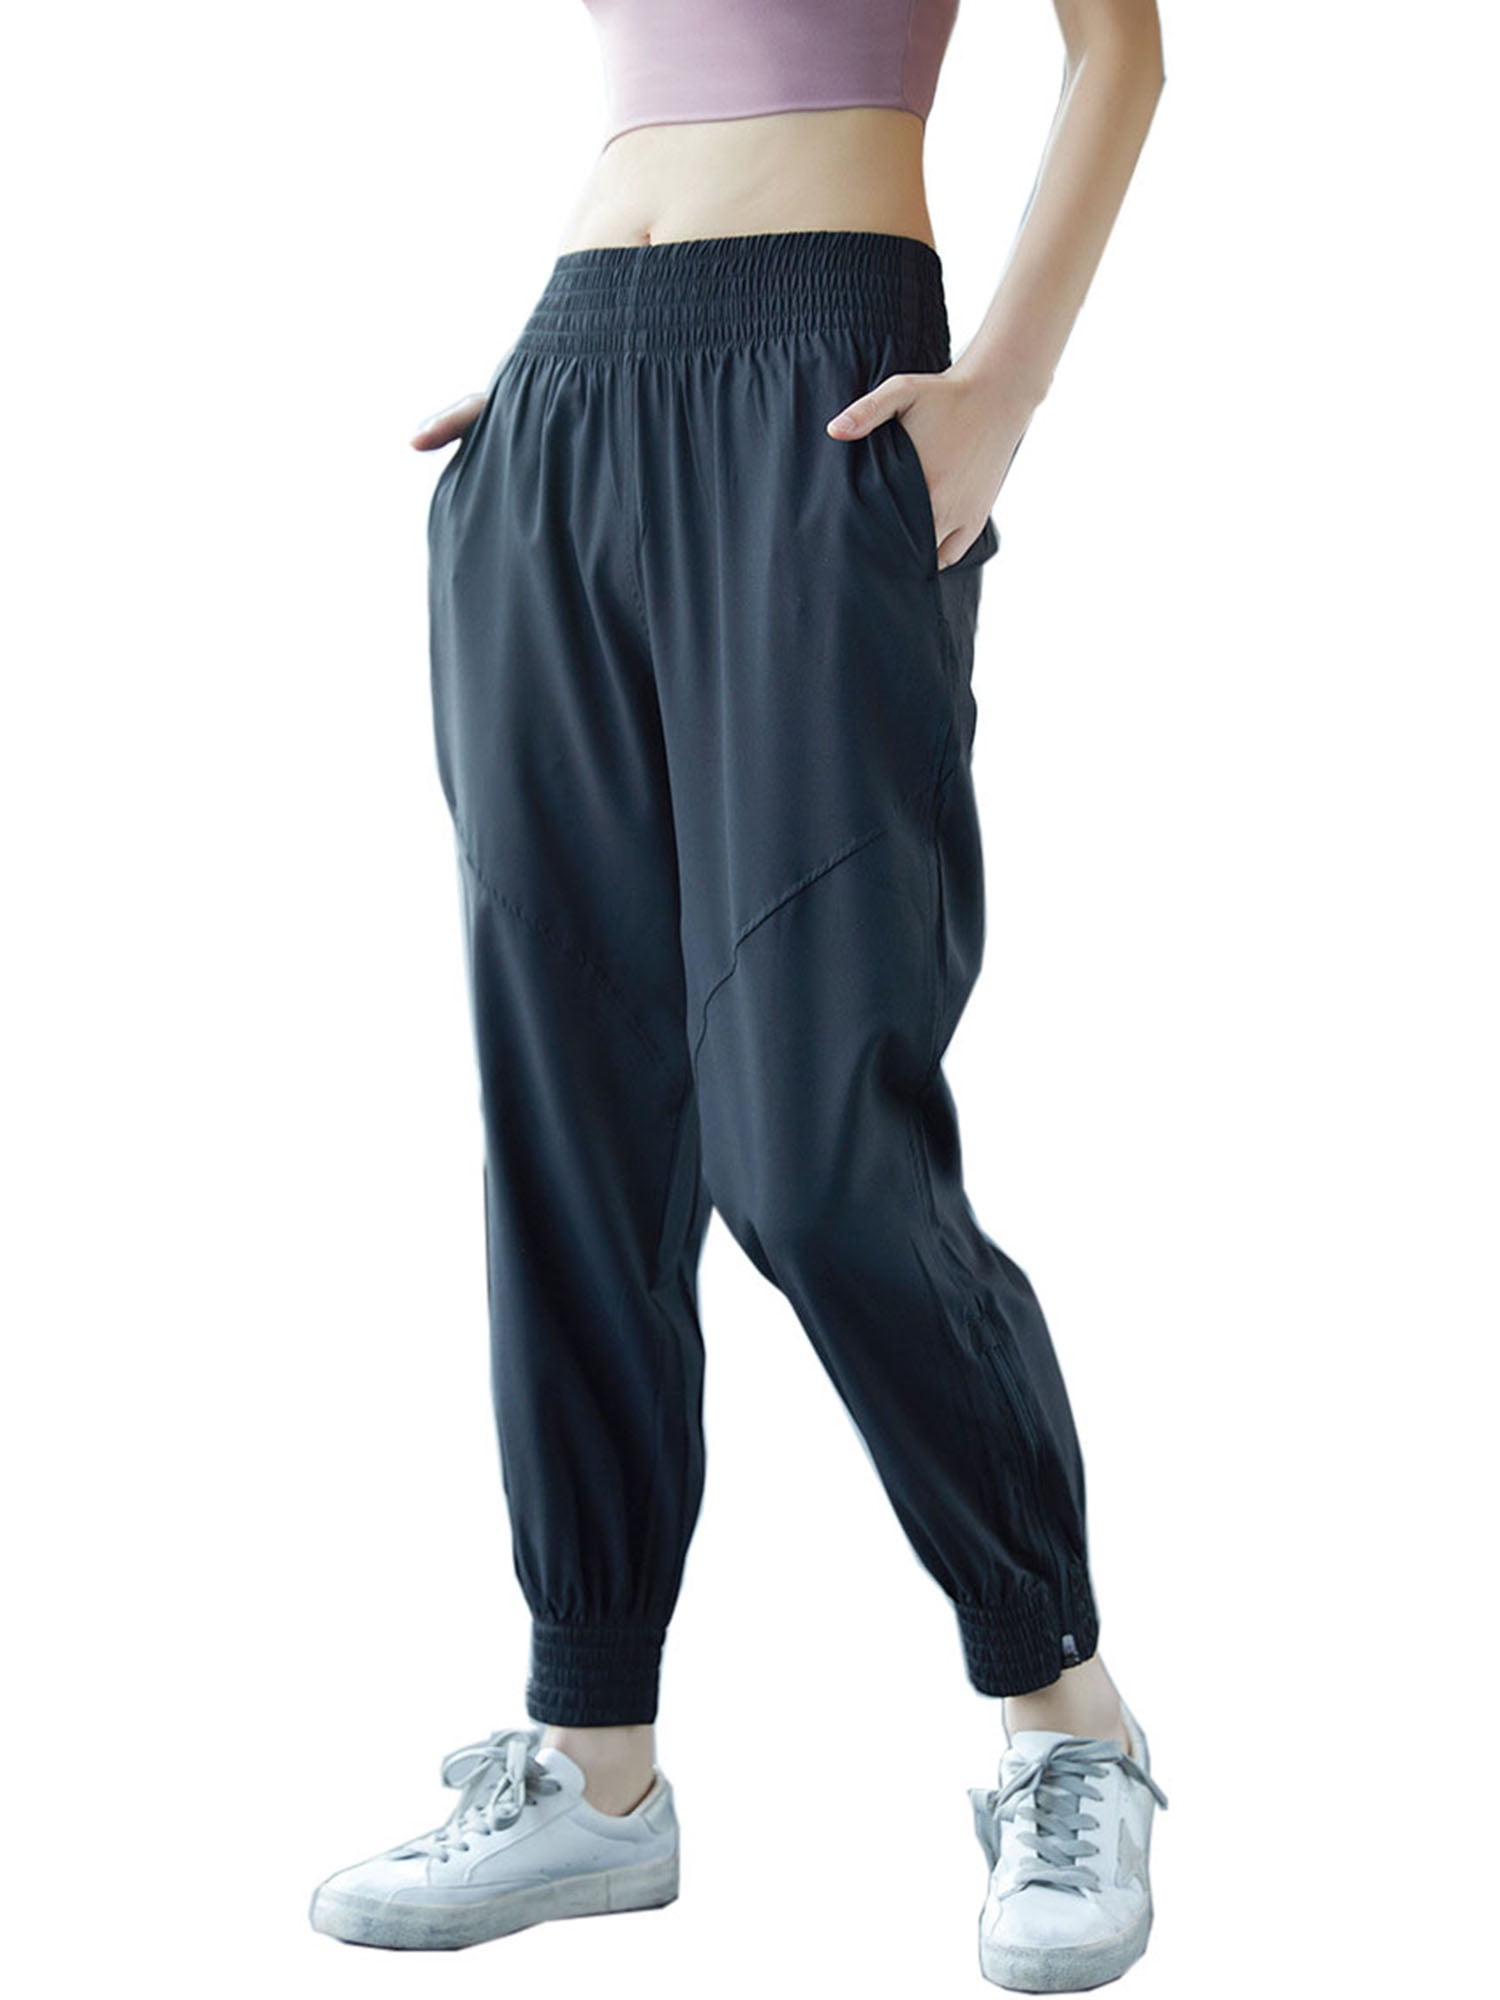 Women Summer Joggers Trousers Floral Tracksuit Bottoms Yoga Pants Lounge Wear、 